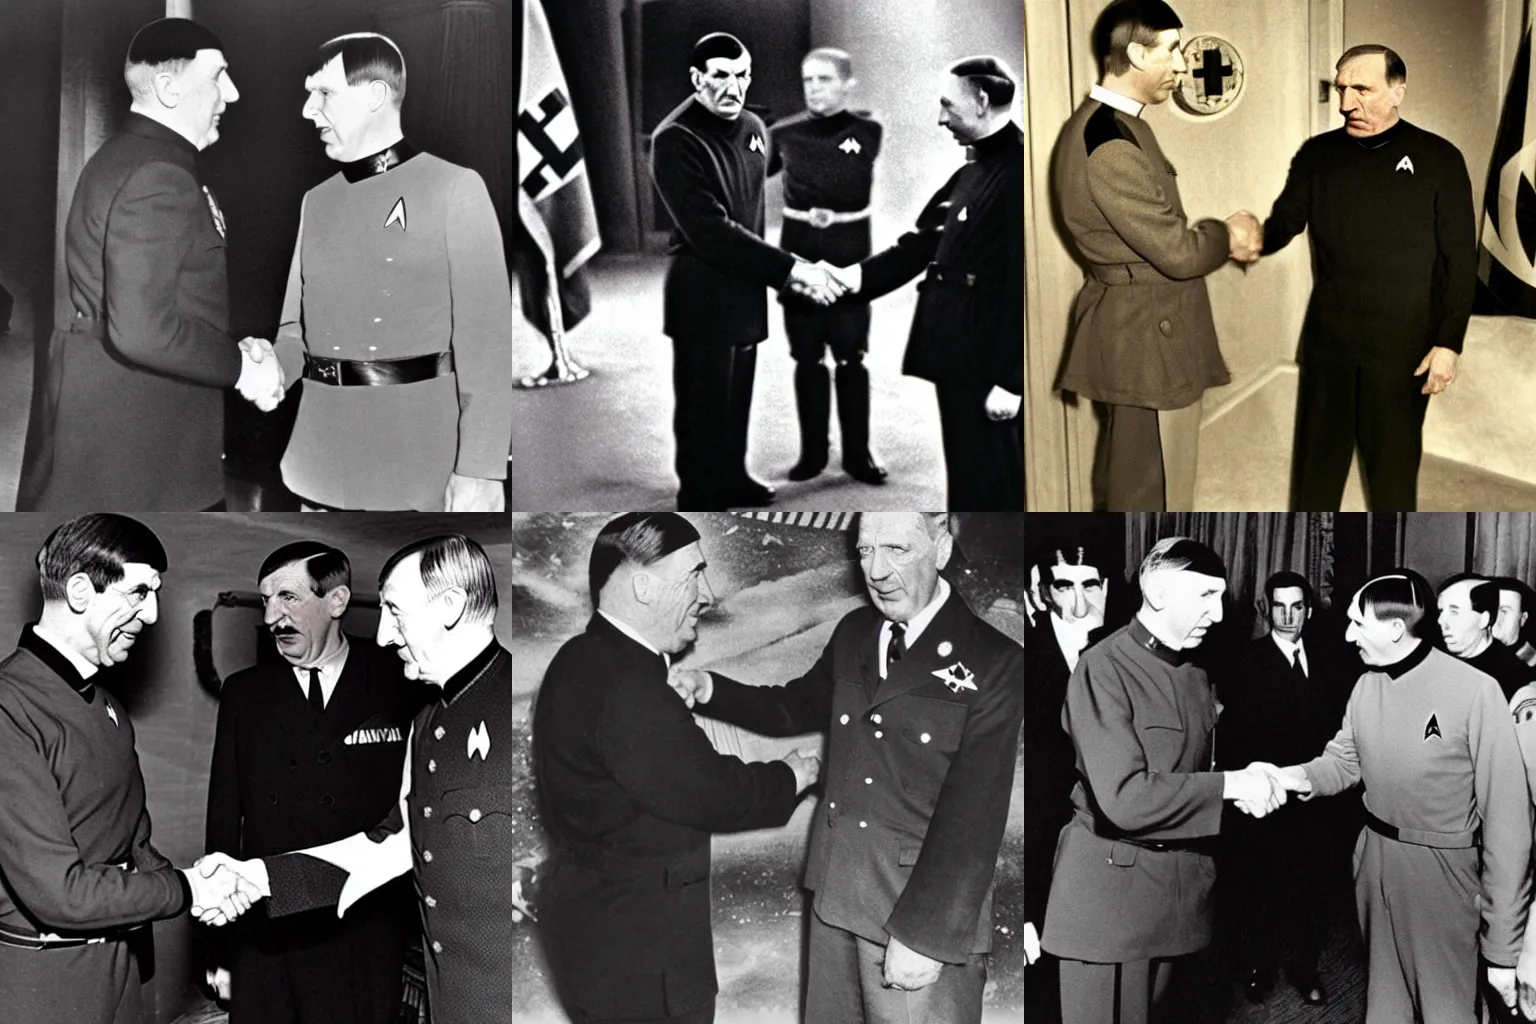 Prompt: Spock from Star Trek shaking hands with Hitler, award winning photo